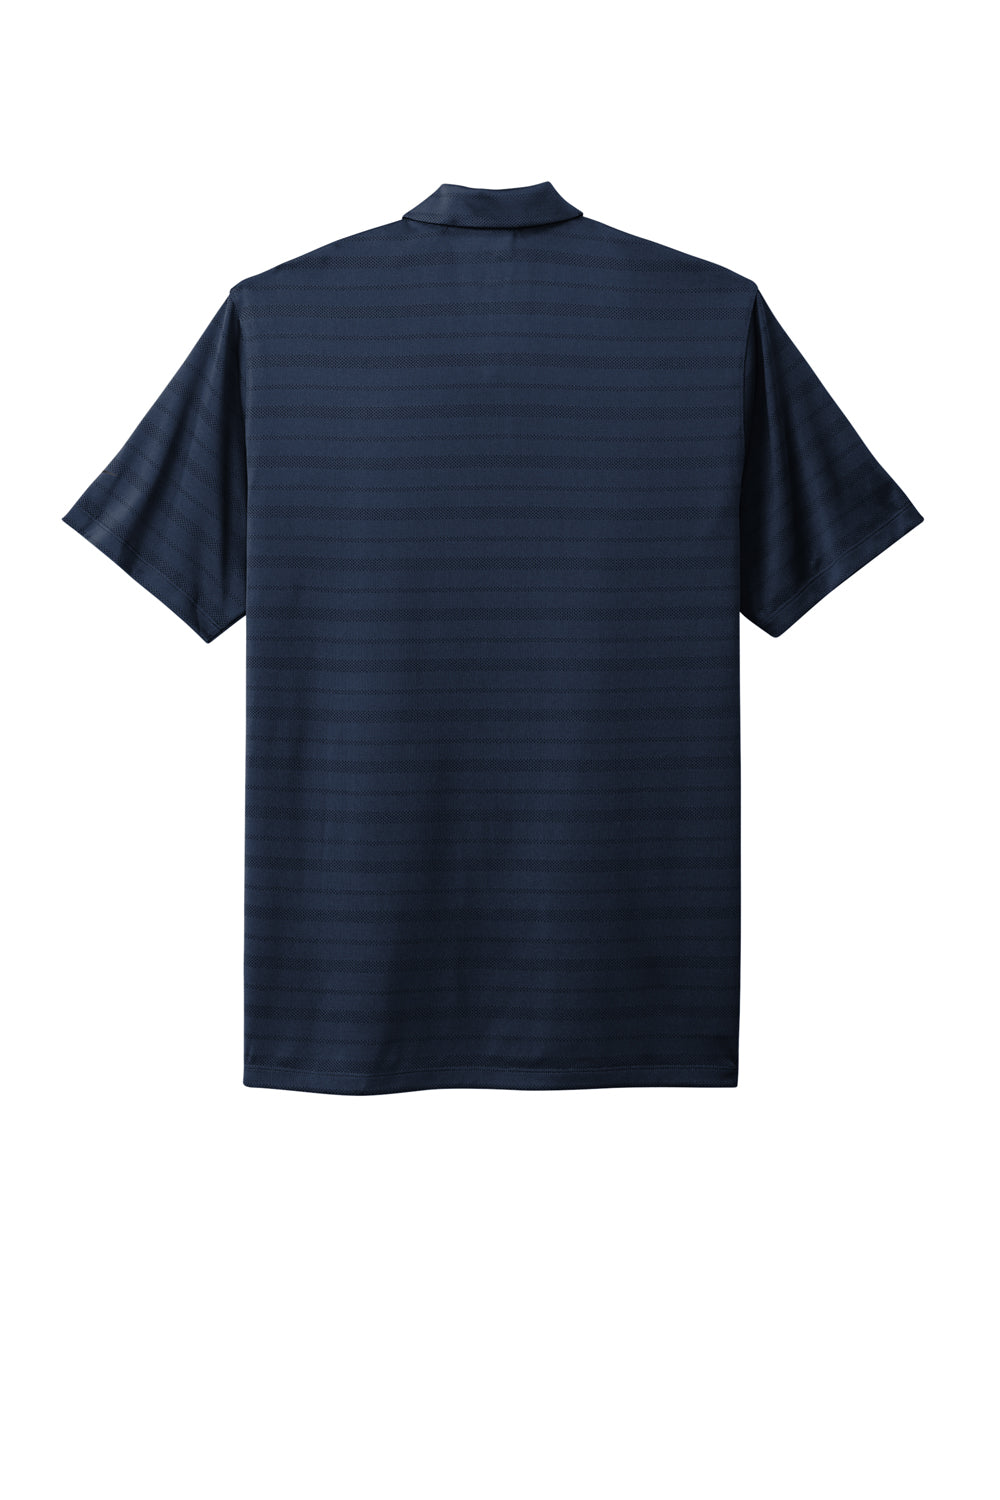 Nike NKDC2115 Mens Vapor Jacquard Dri-Fit Moisture Wicking Short Sleeve Polo Shirt Navy Blue Flat Back